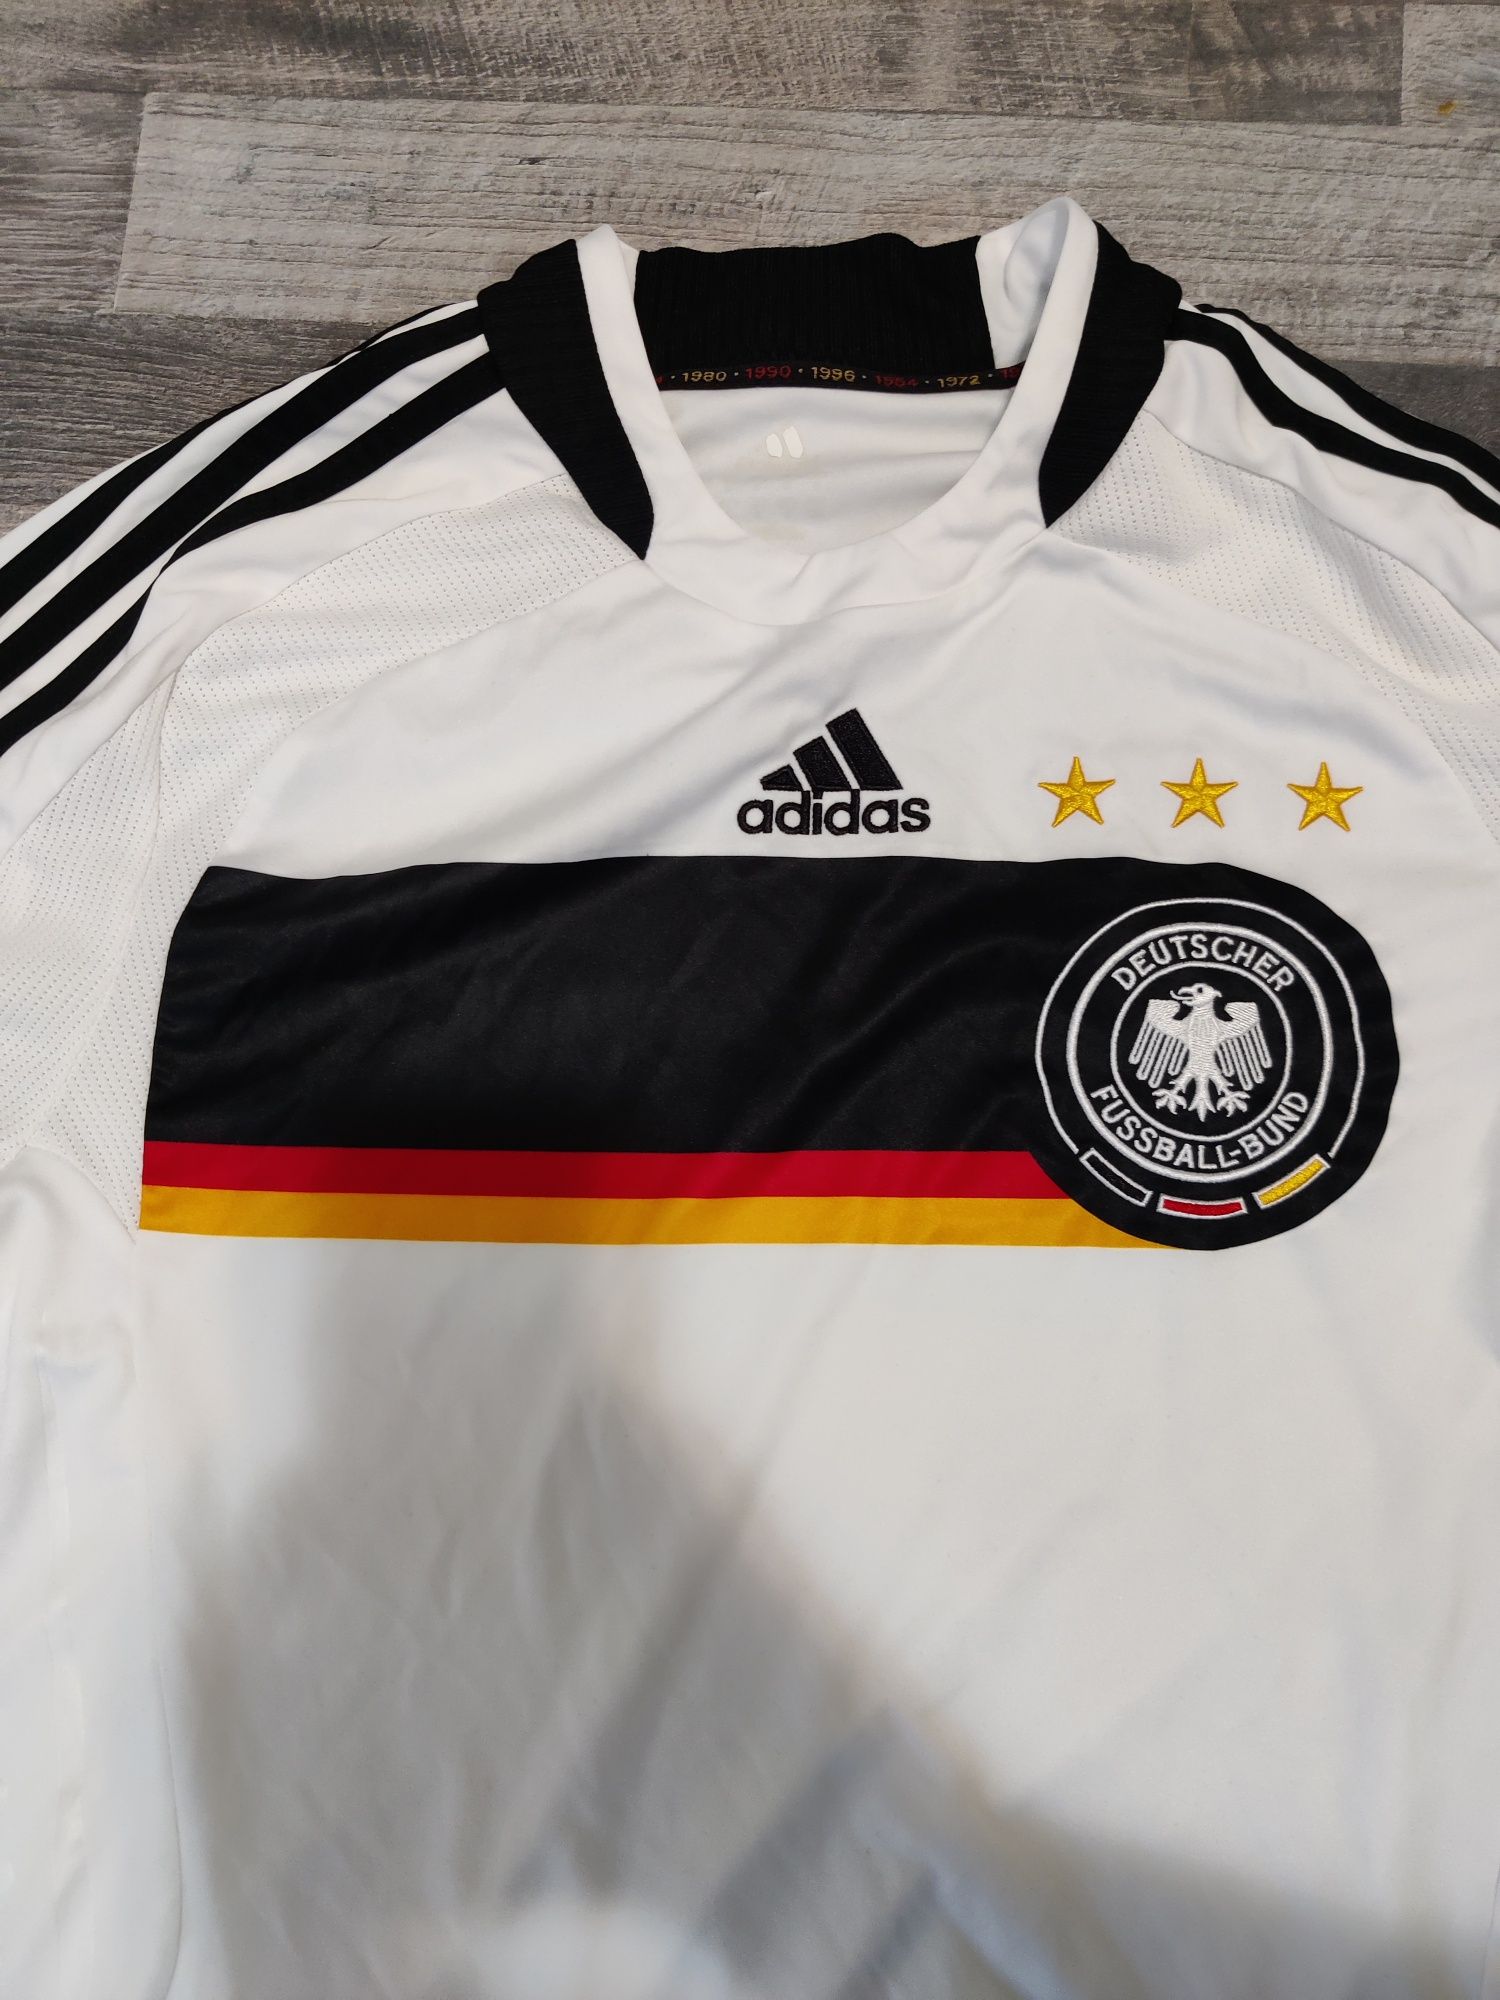 Adidas Germany фланелка 2008/2009